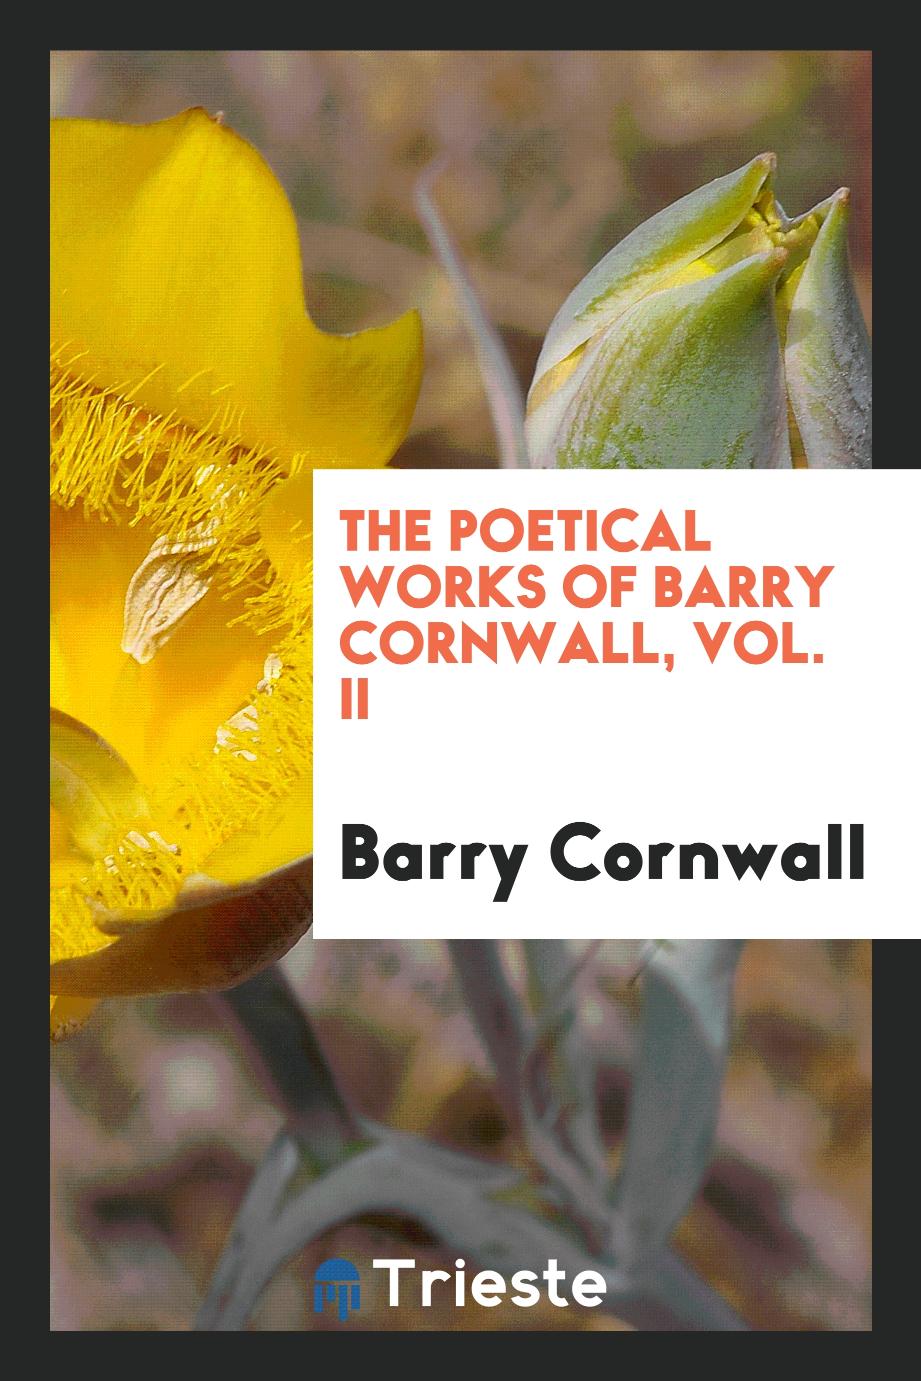 The poetical works of Barry Cornwall, Vol. II